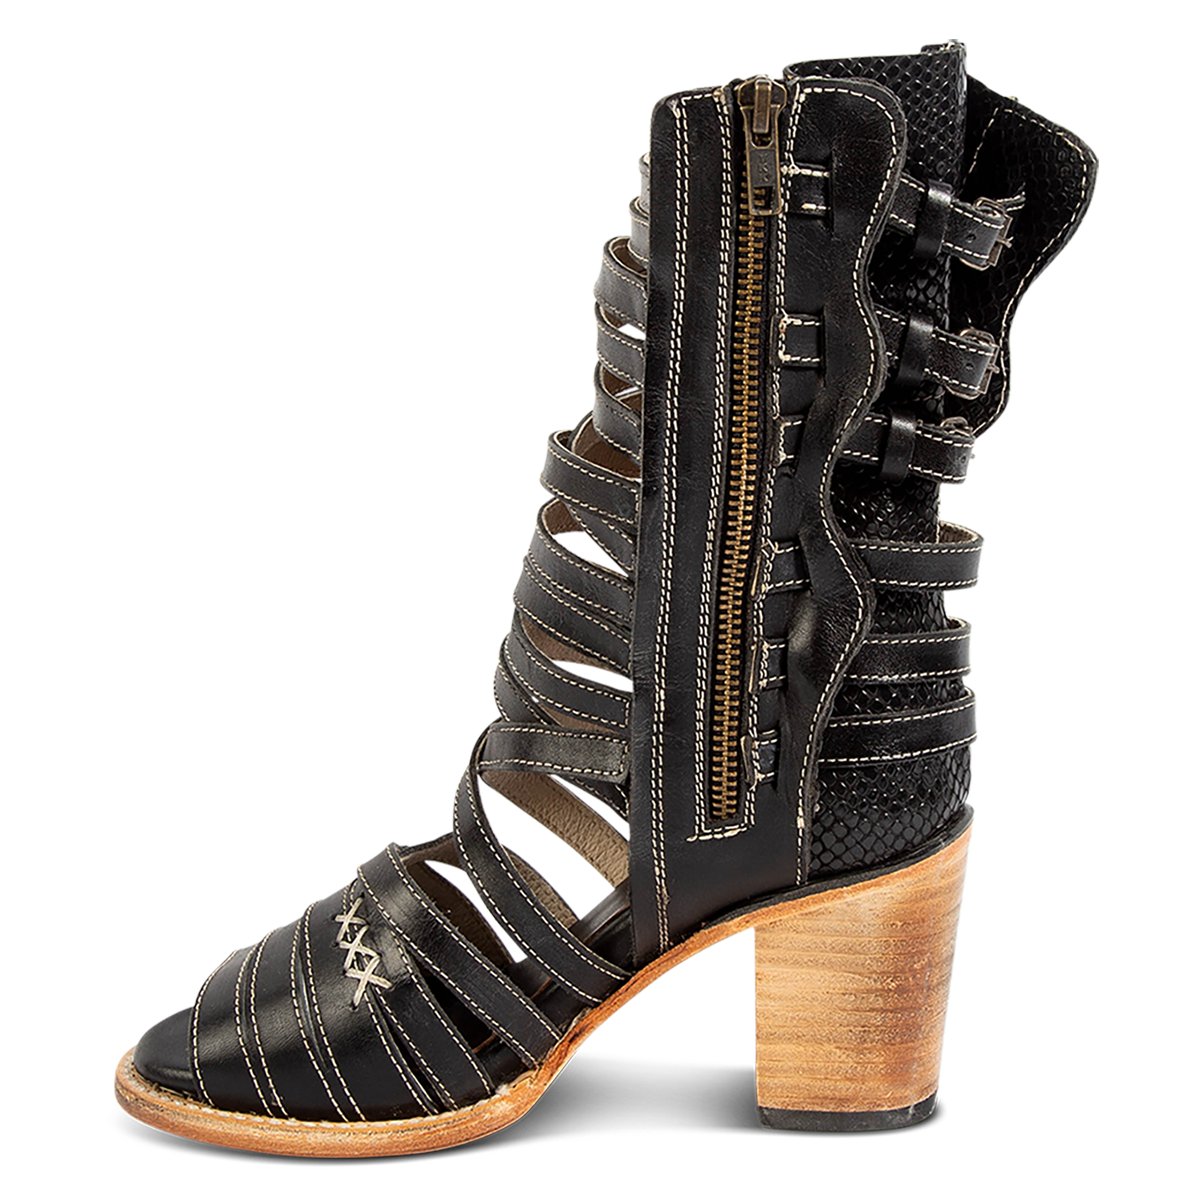 Inside view showing a working brass zipper, block heel and leather straps on FREEBIRD women's Makayla black leather sandal